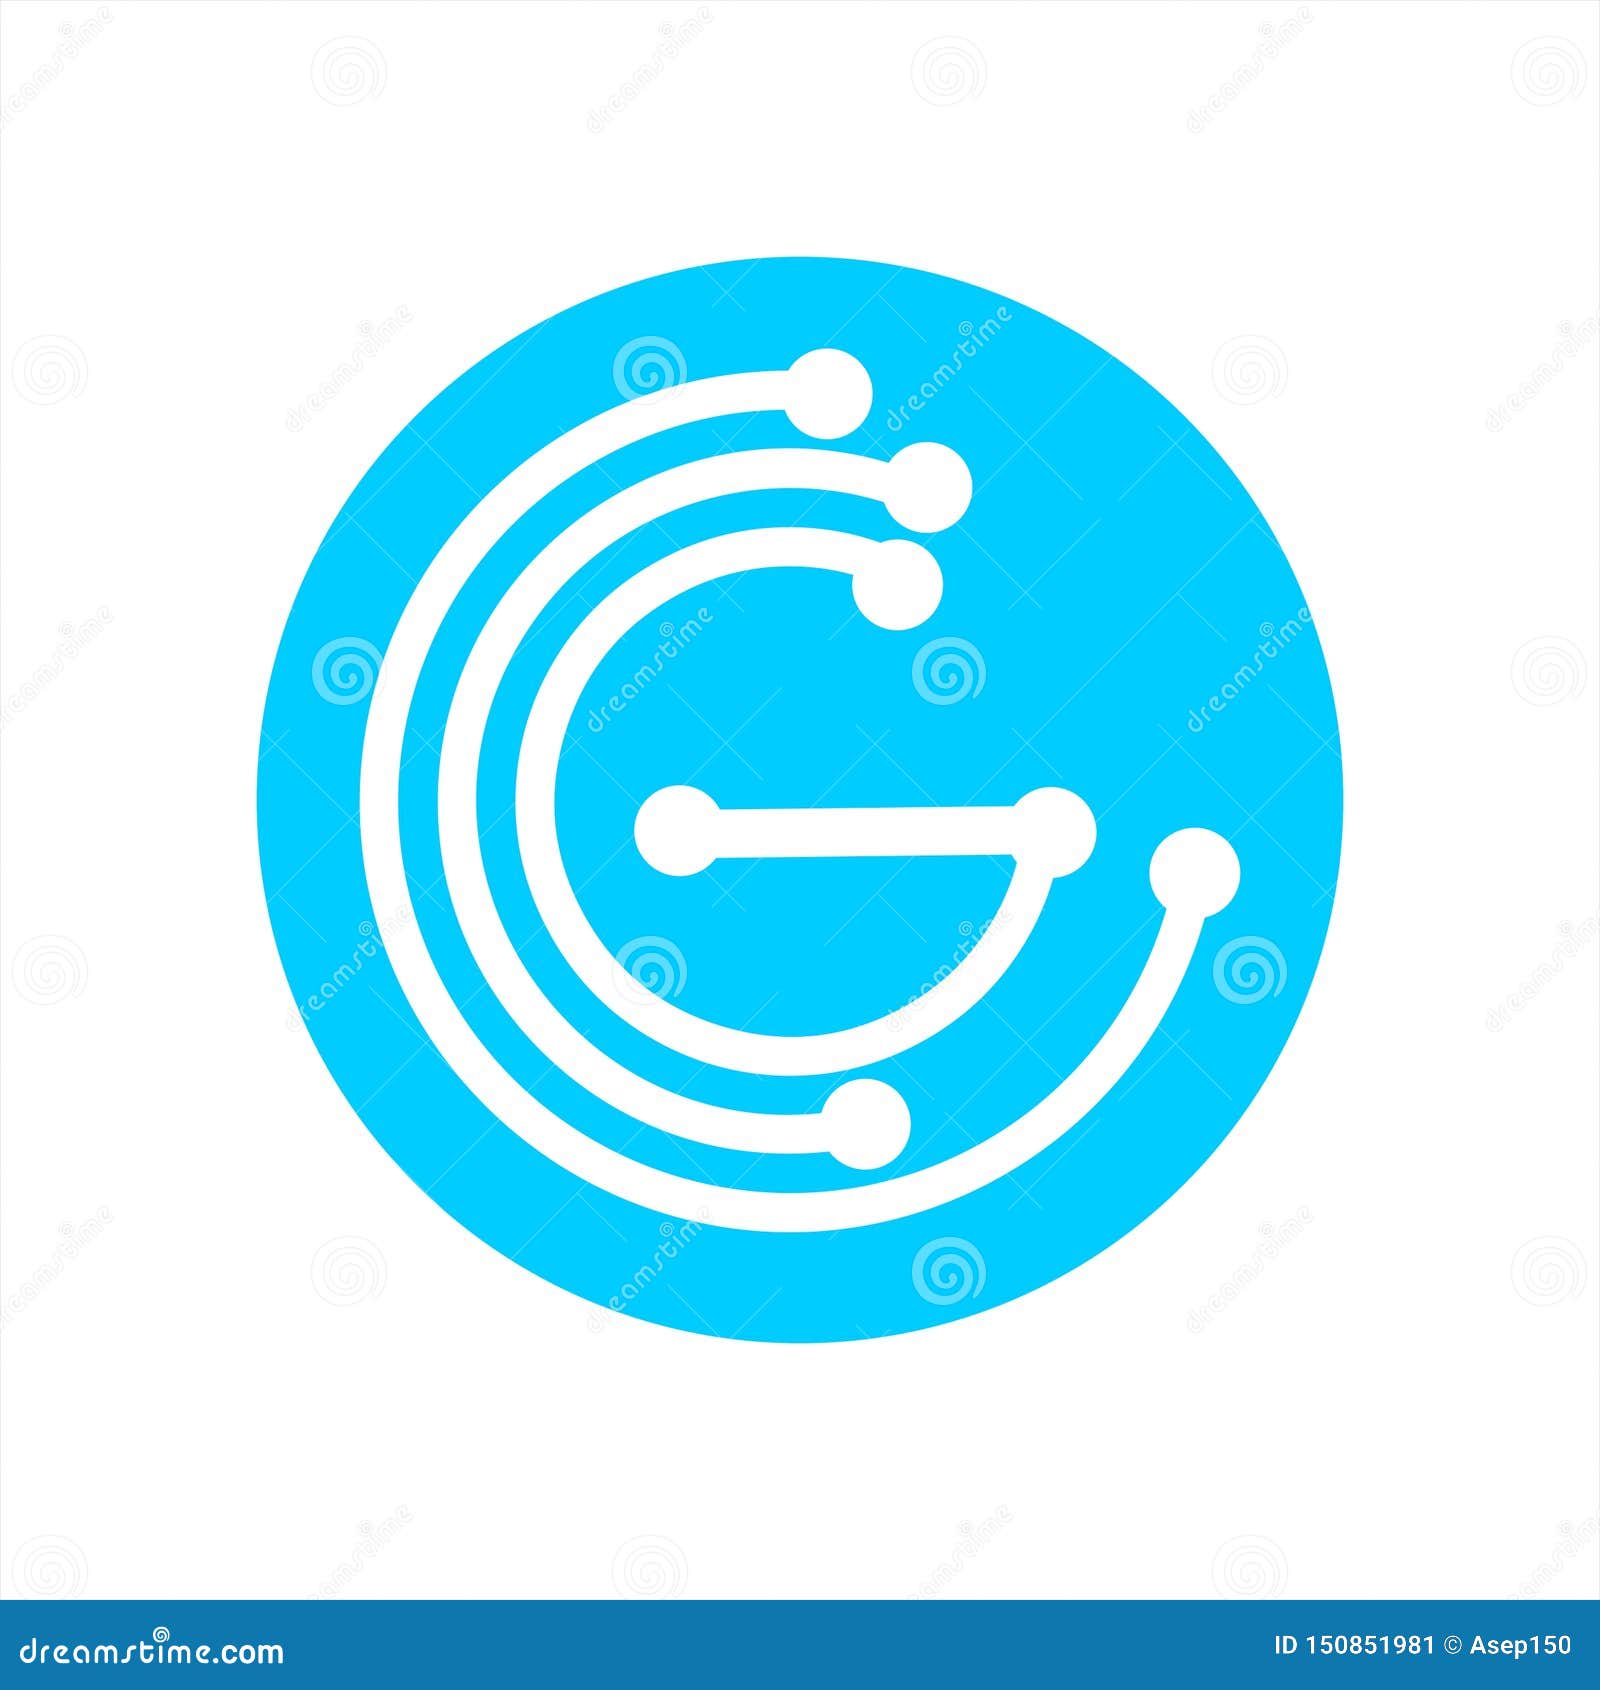 g, ccg, cg initials geometric network line logo